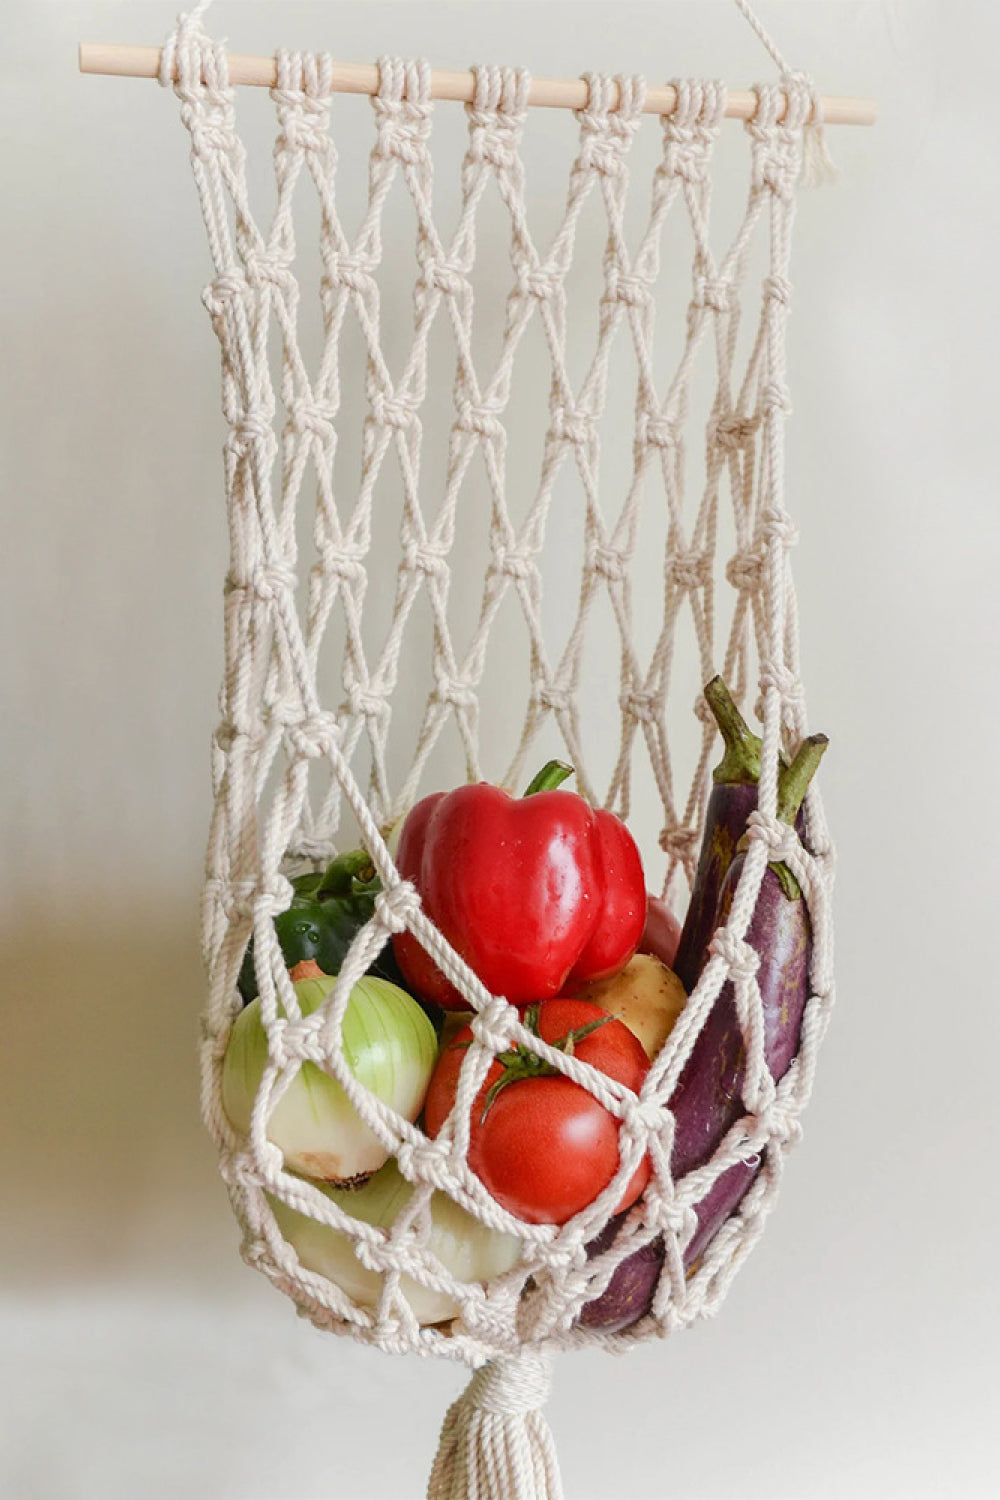 Handmade Macrame Basket Wall Hanging